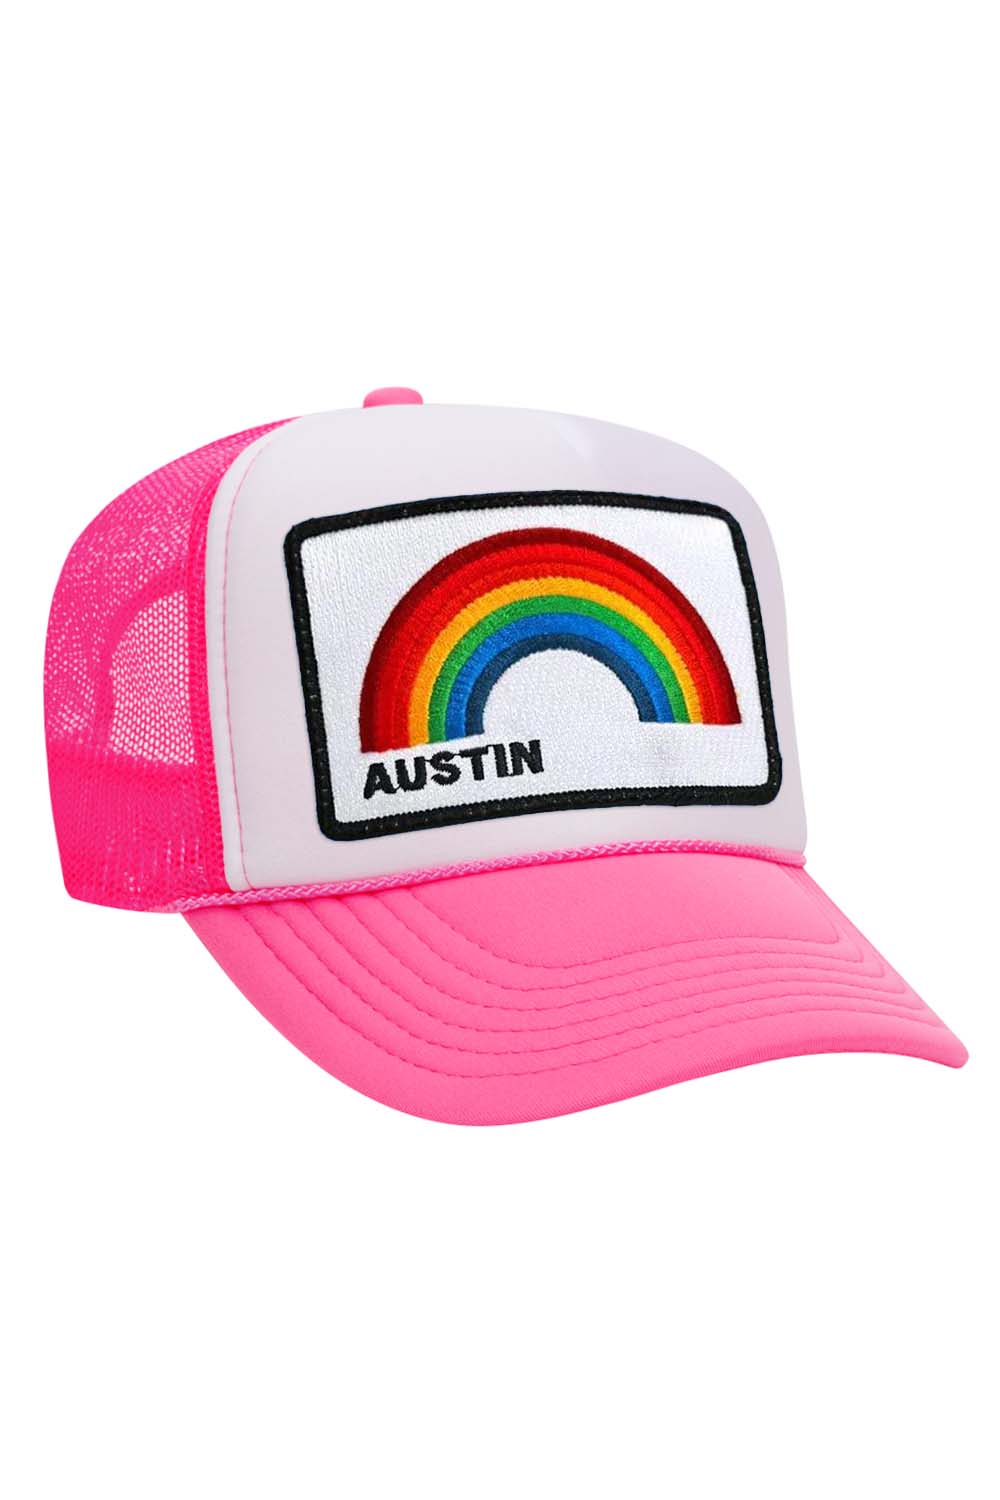 AUSTIN RAINBOW TRUCKER HAT HATS Aviator Nation OS NEON PINK / WHITE / NEON PINK 